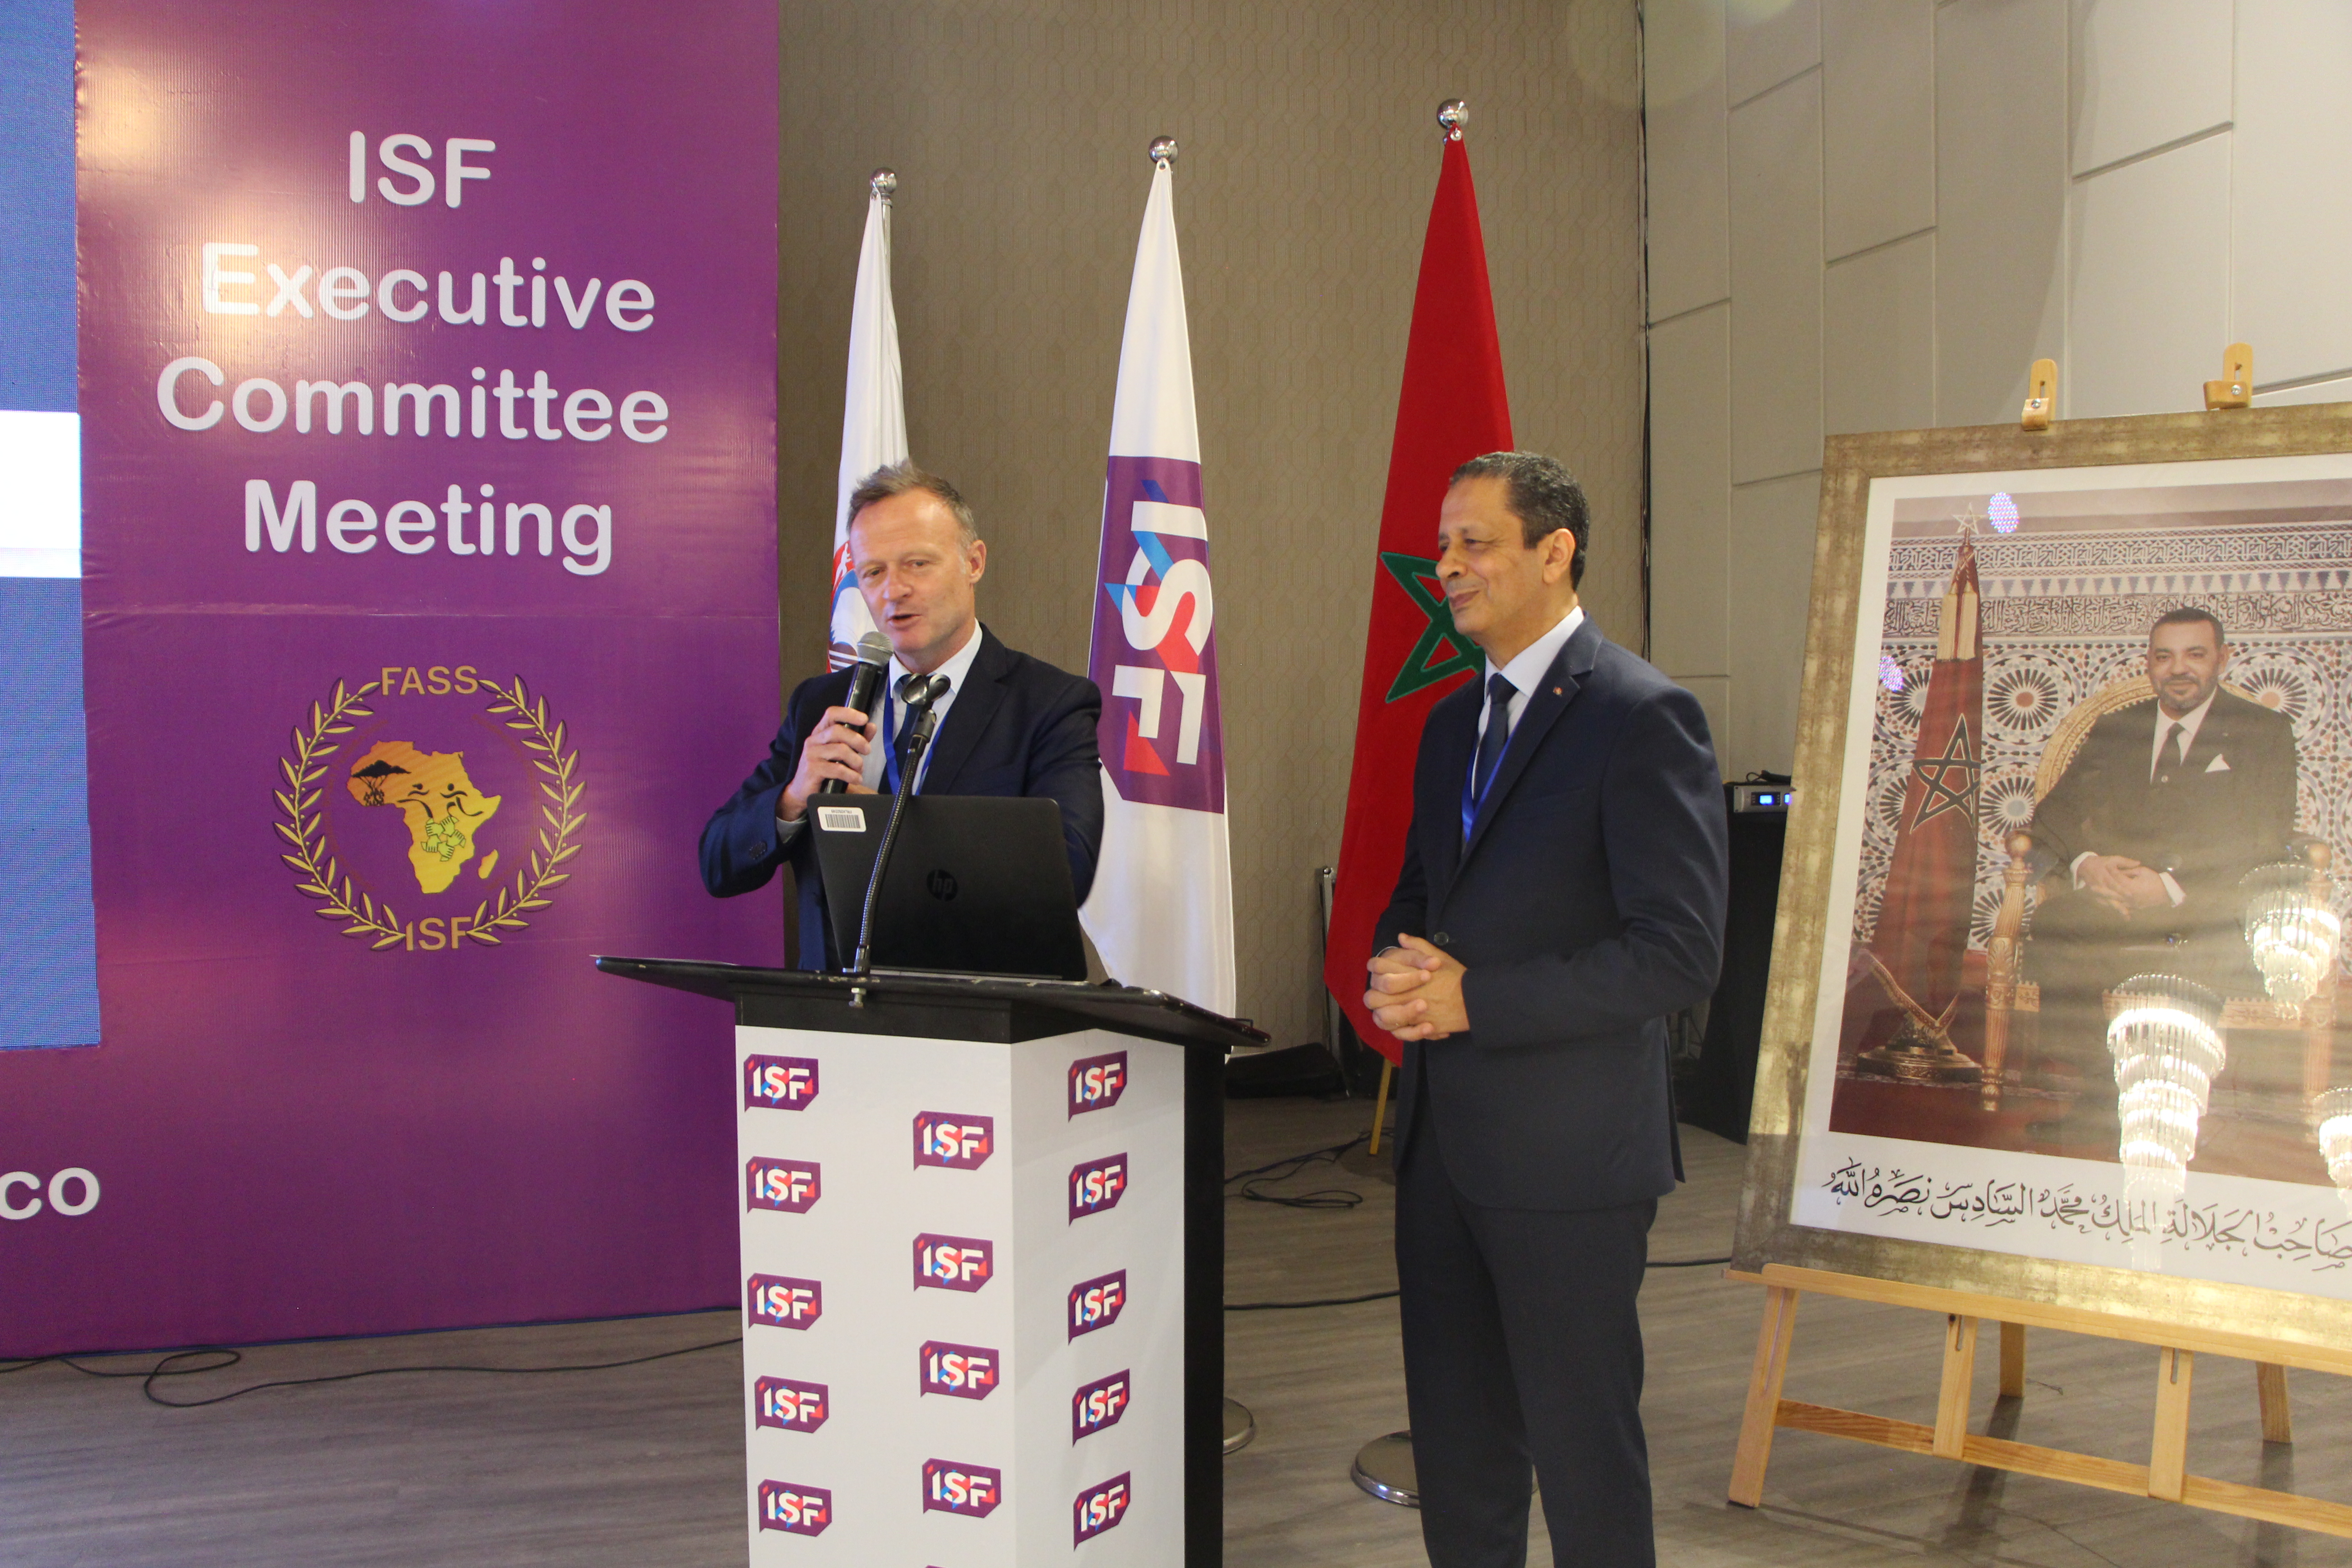 ISF President Petrynka Welcoming EC ISF